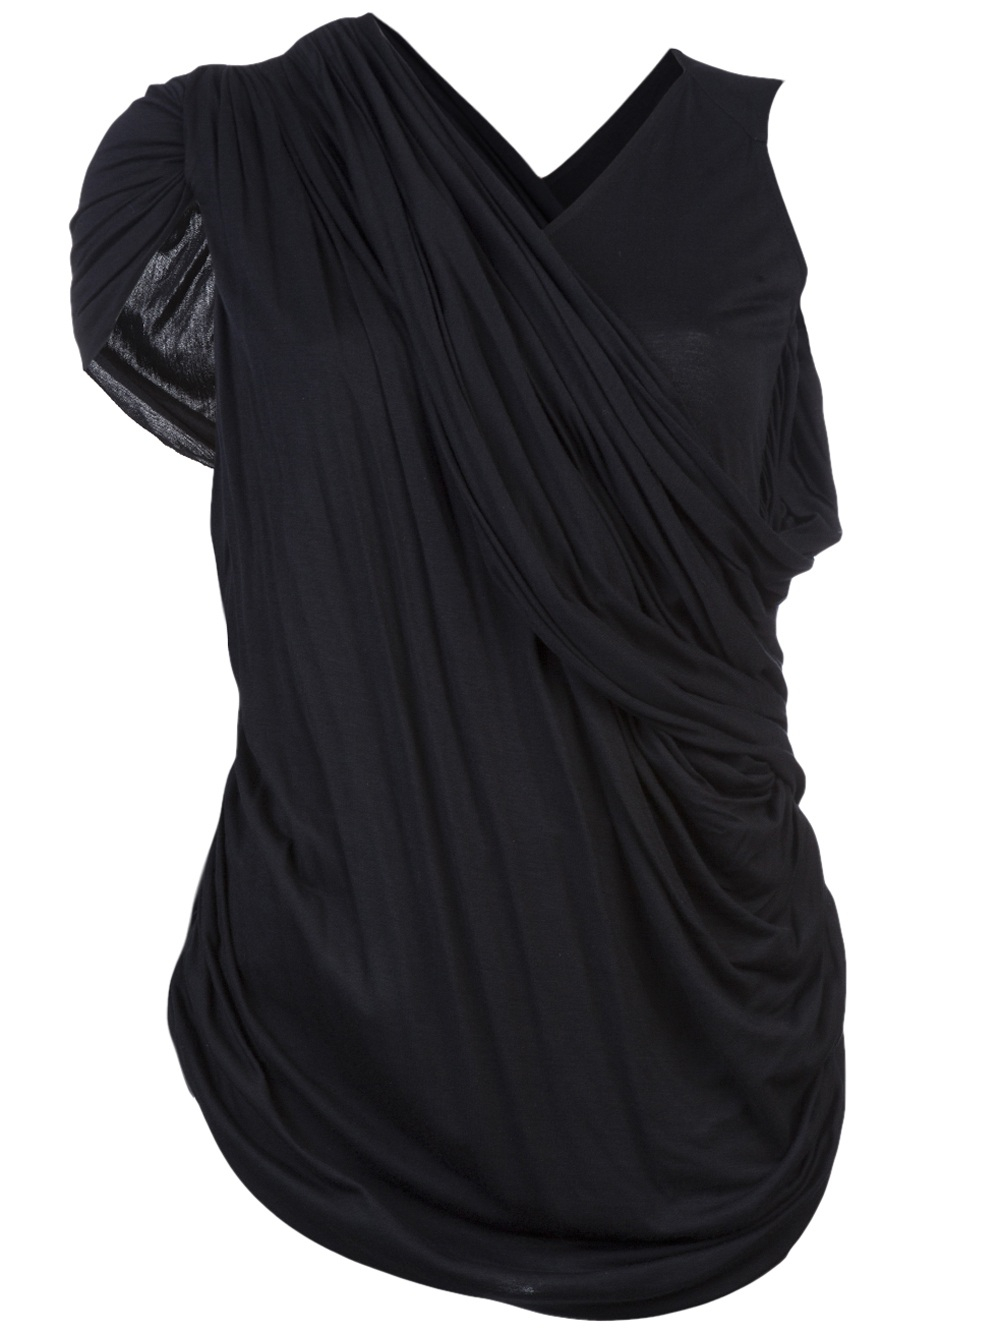 Lyst - Givenchy Asymmetric Drape Top in Black